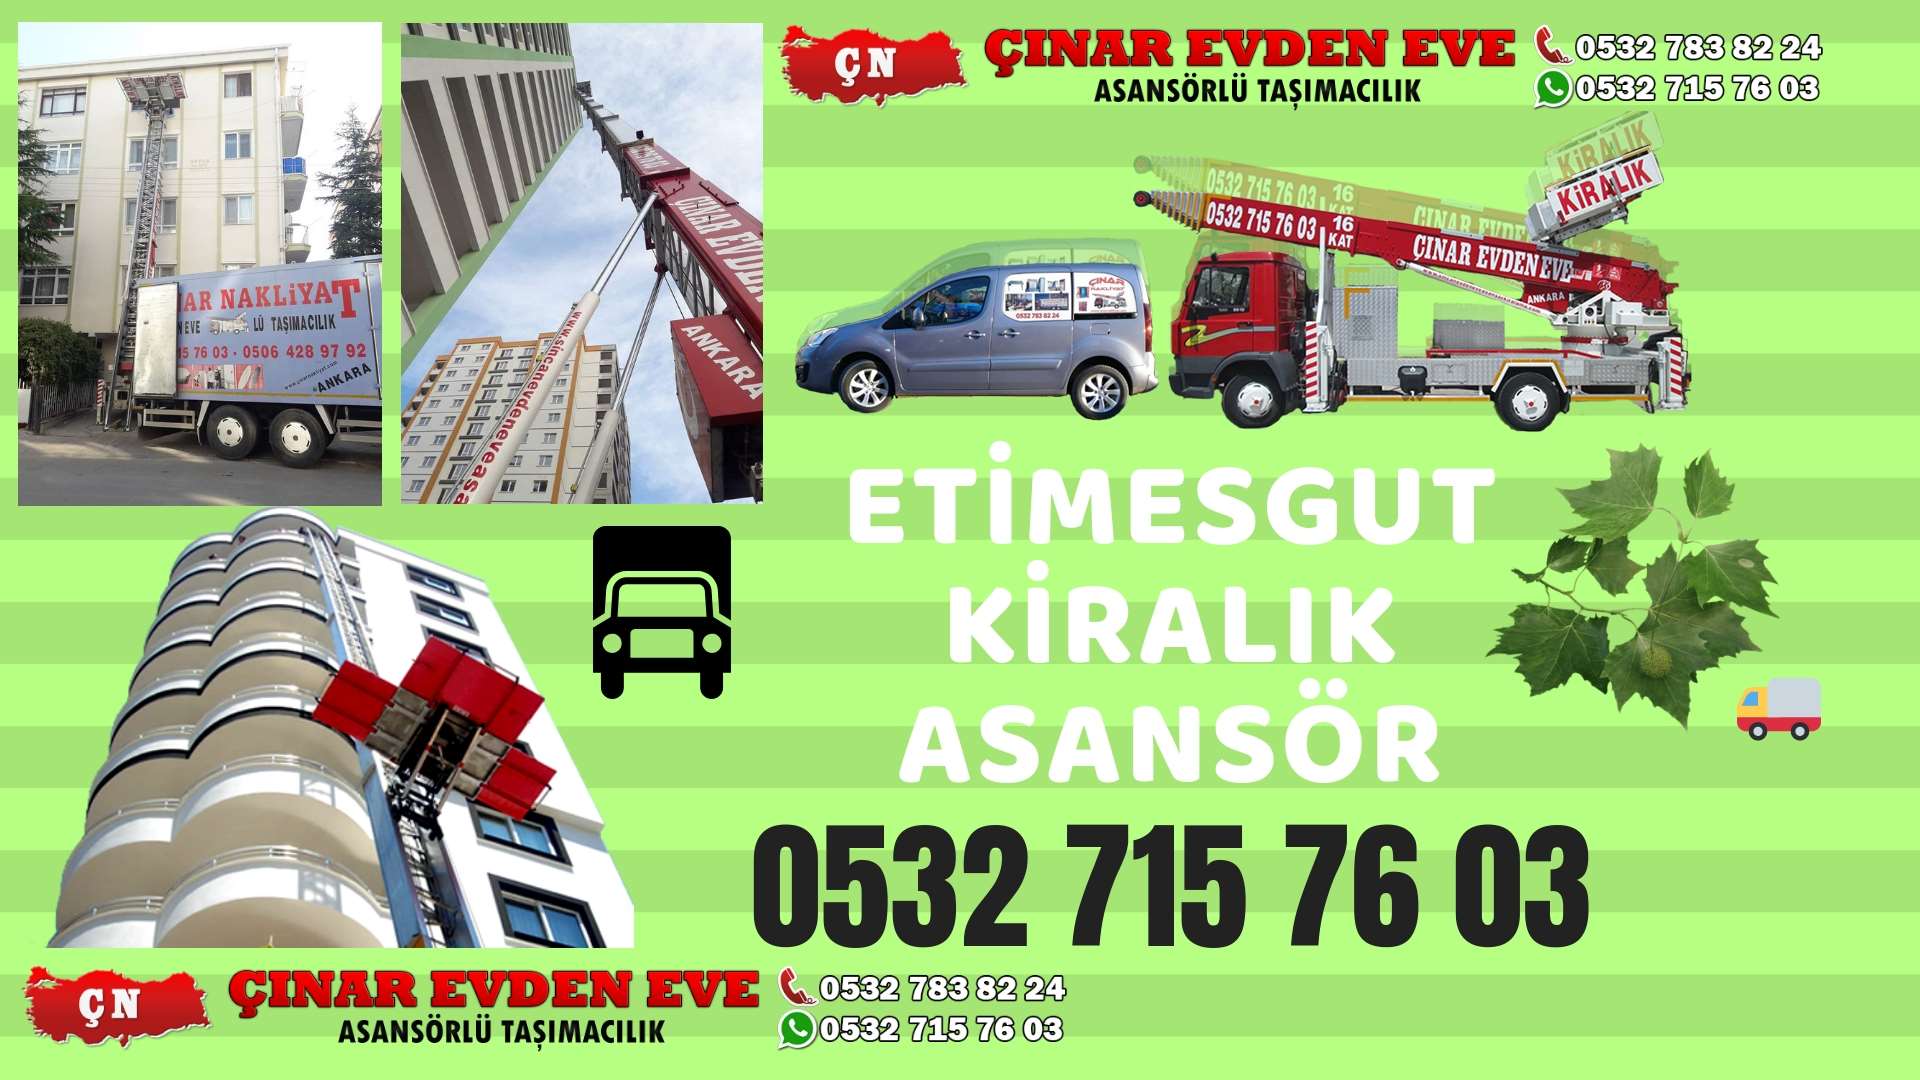 Ankara Ostim Ev taşıma asansörü kiralama ankara 0532 715 76 03